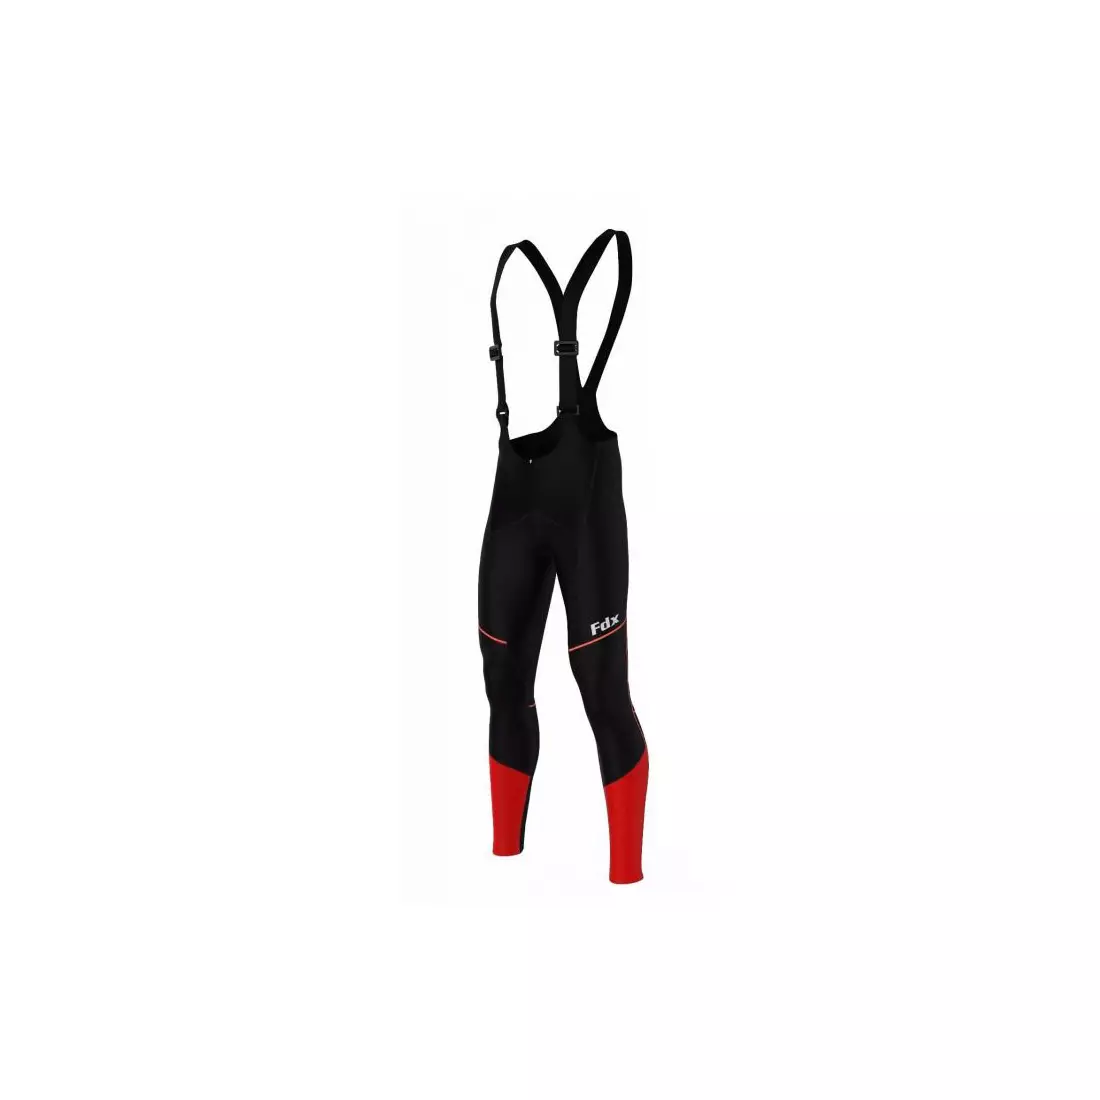 FDX 1300 Warm cycling shorts Softshell, softshell black-red